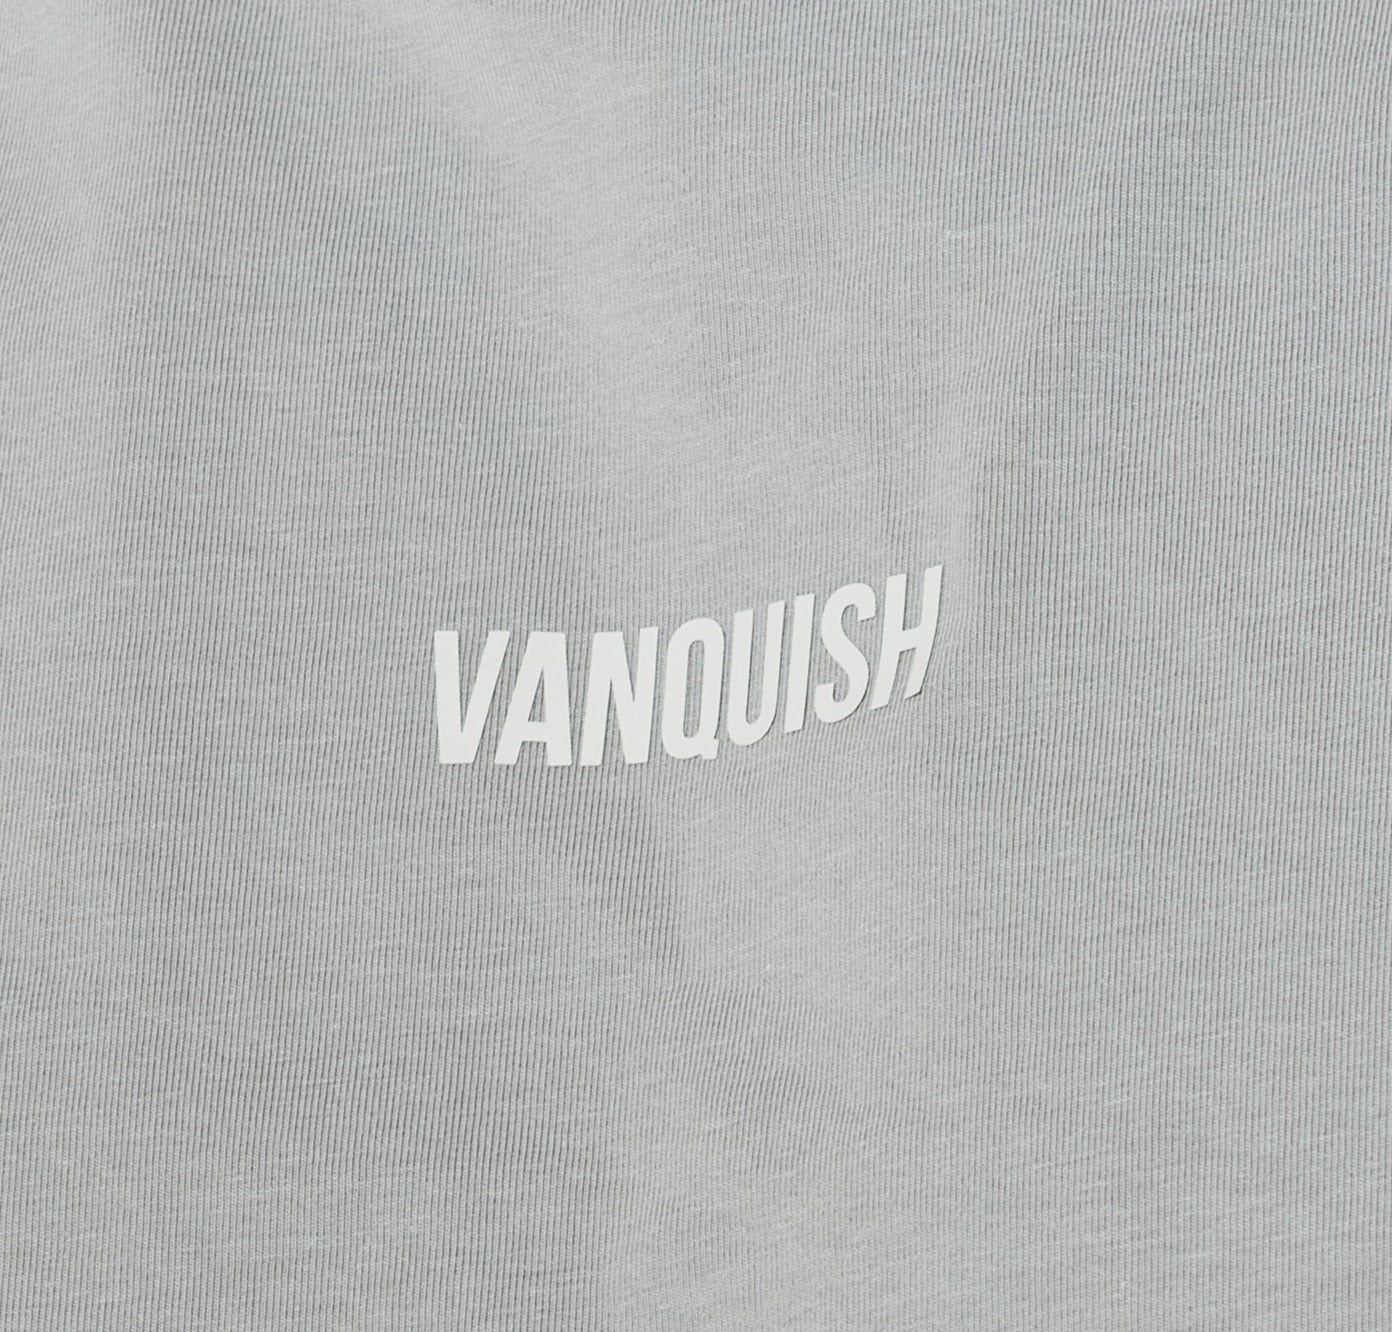 Vanquish Essential Steel Grey Oversized Sleeveless T Shirt